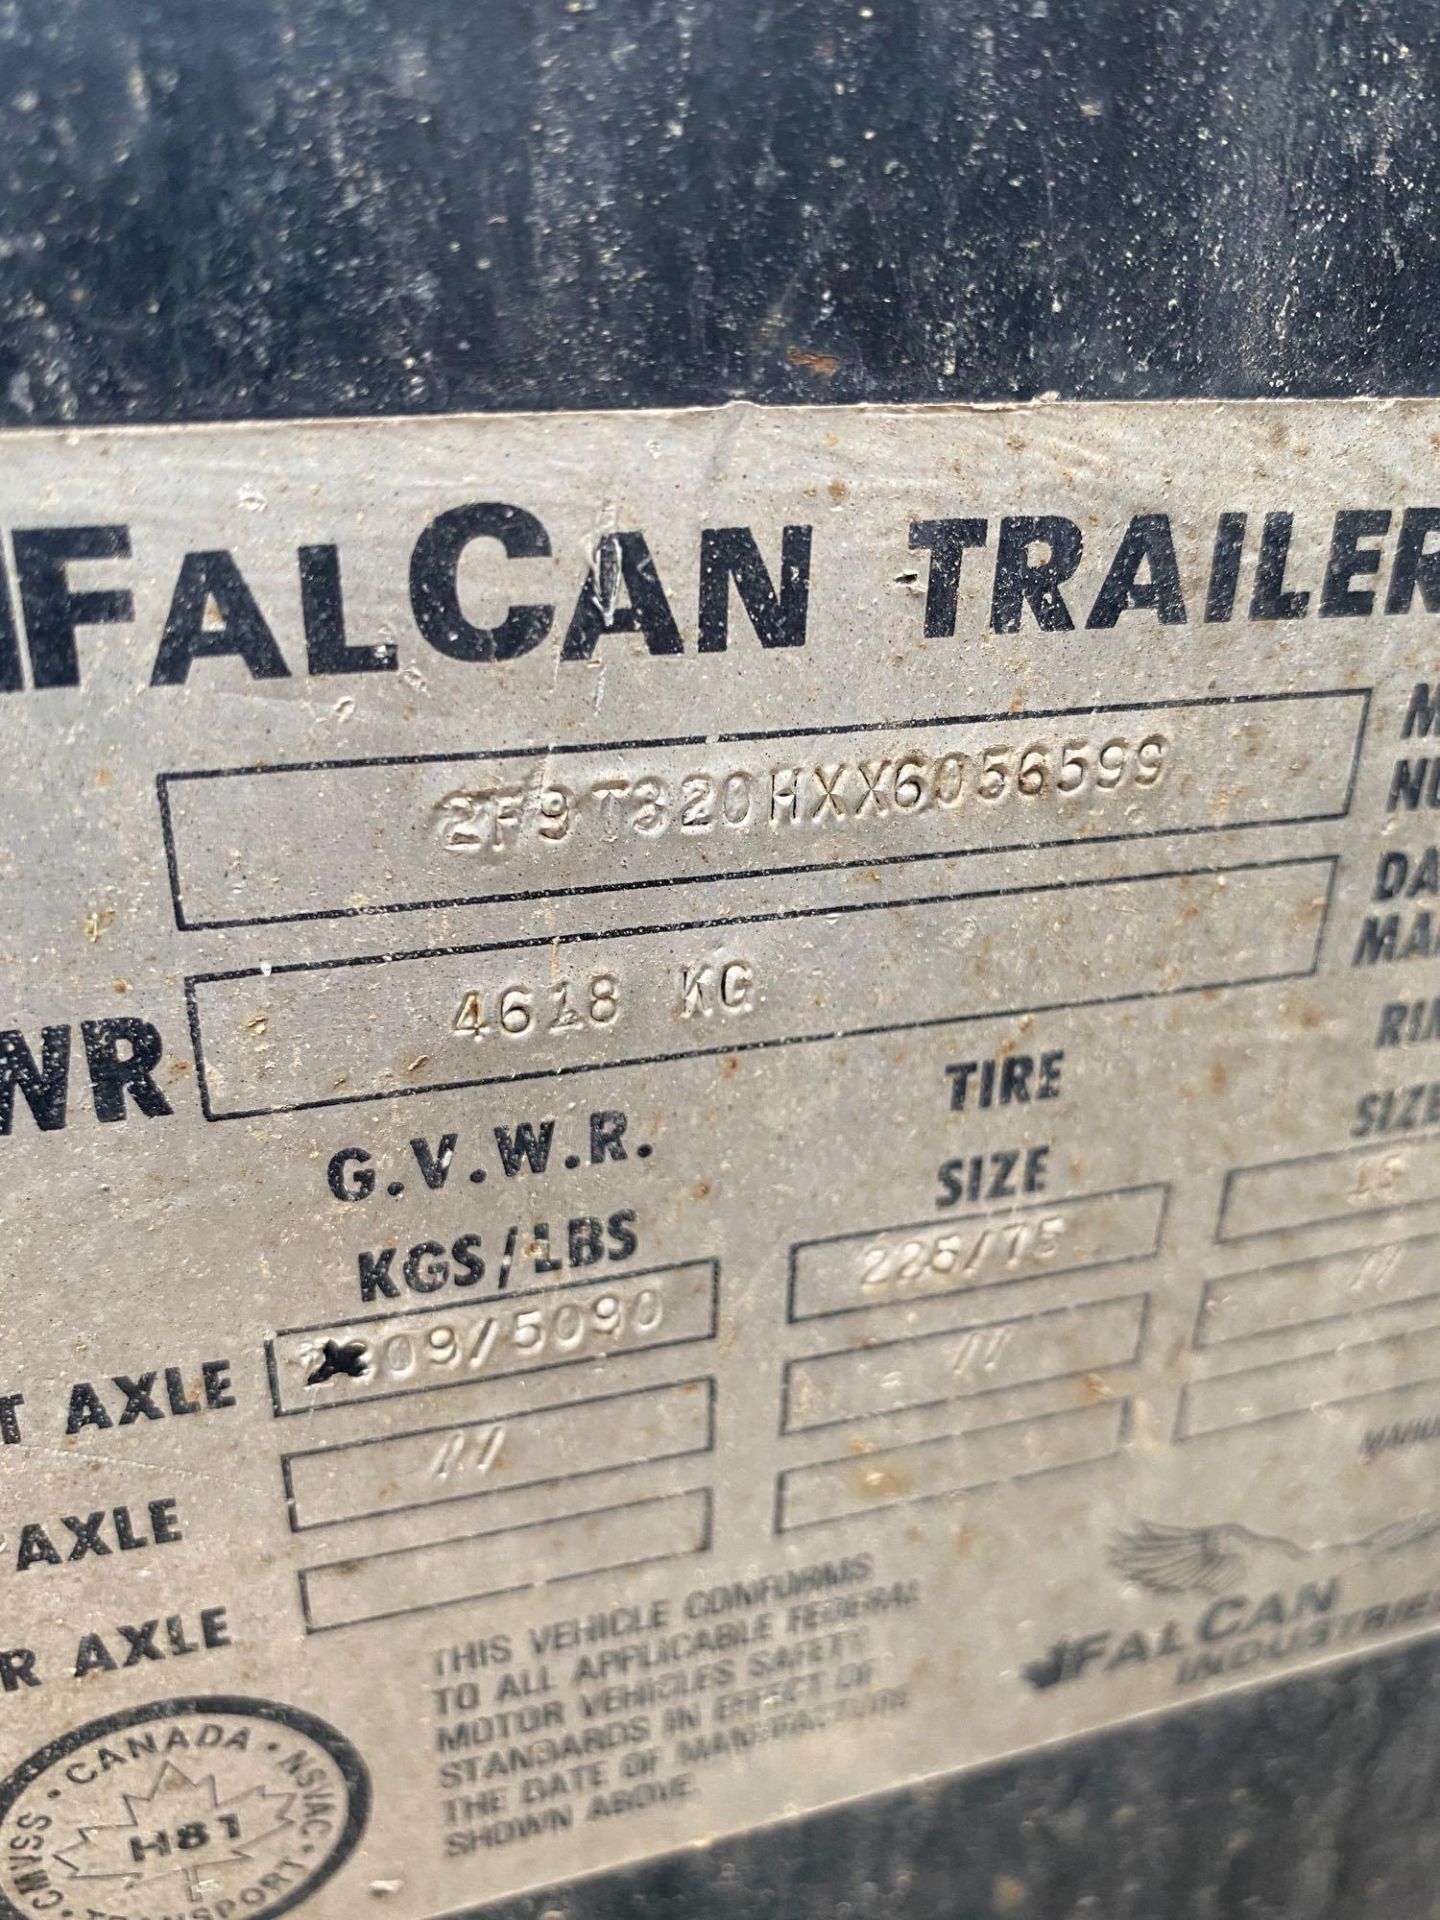 1999 FalCan 20' T/A Flat Deck Trailer, VIN# 2F9T320HXX6056599 - Image 9 of 14